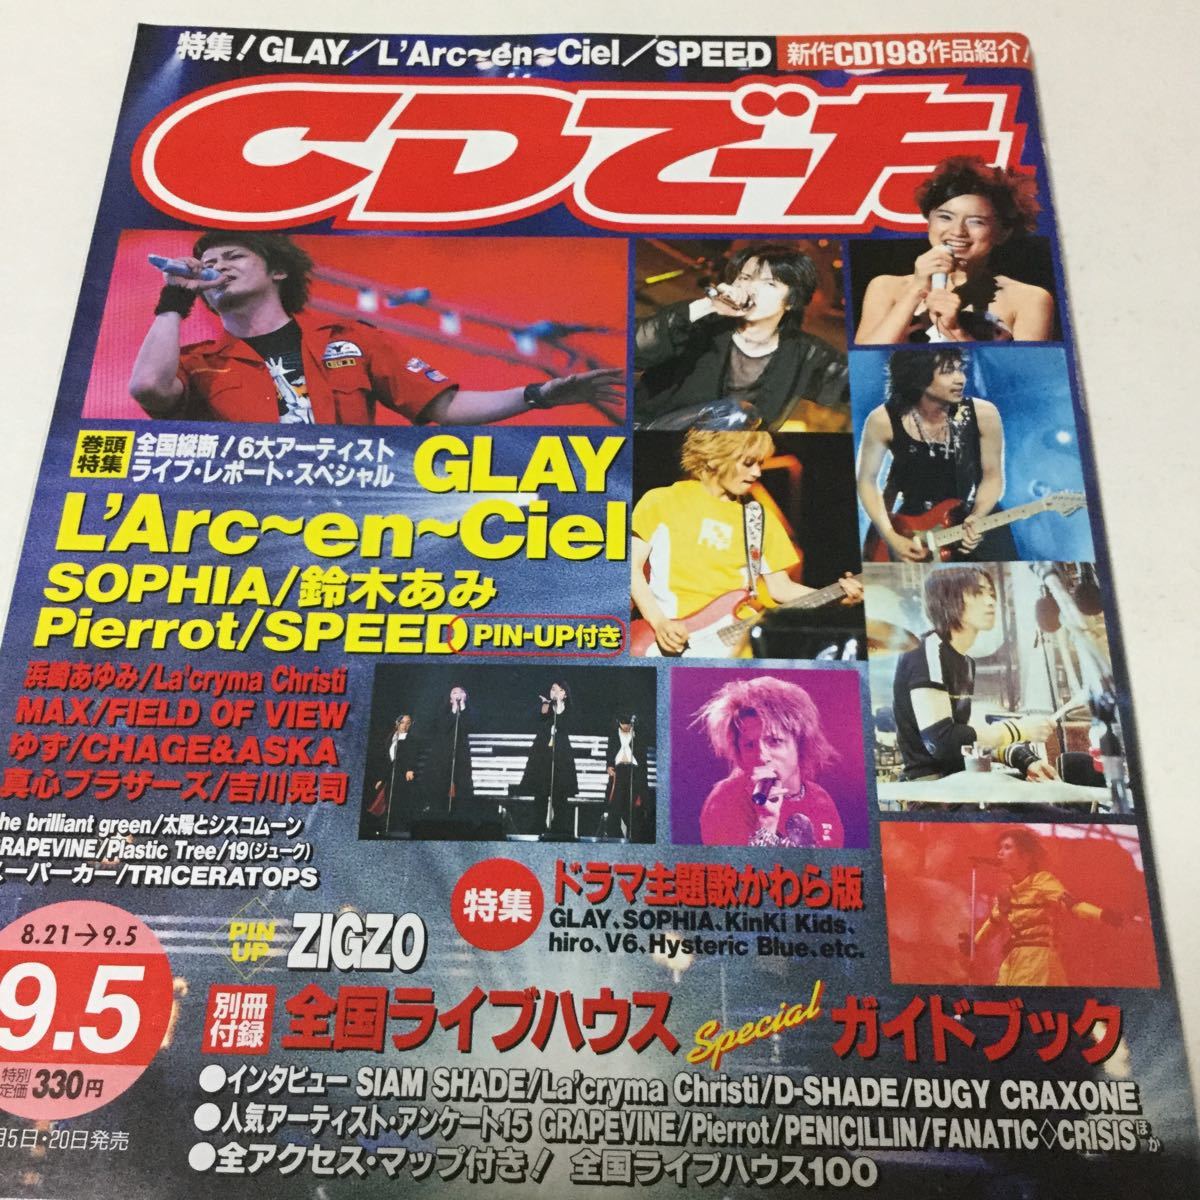 32 CD.-.1999 год vol.11 No.15 журнал книга@ певец GLAYlarukL\'Arc~en~Ciel SOPHIA SPEED скорость Suzuki Ami CD Hamasaki Ayumi .